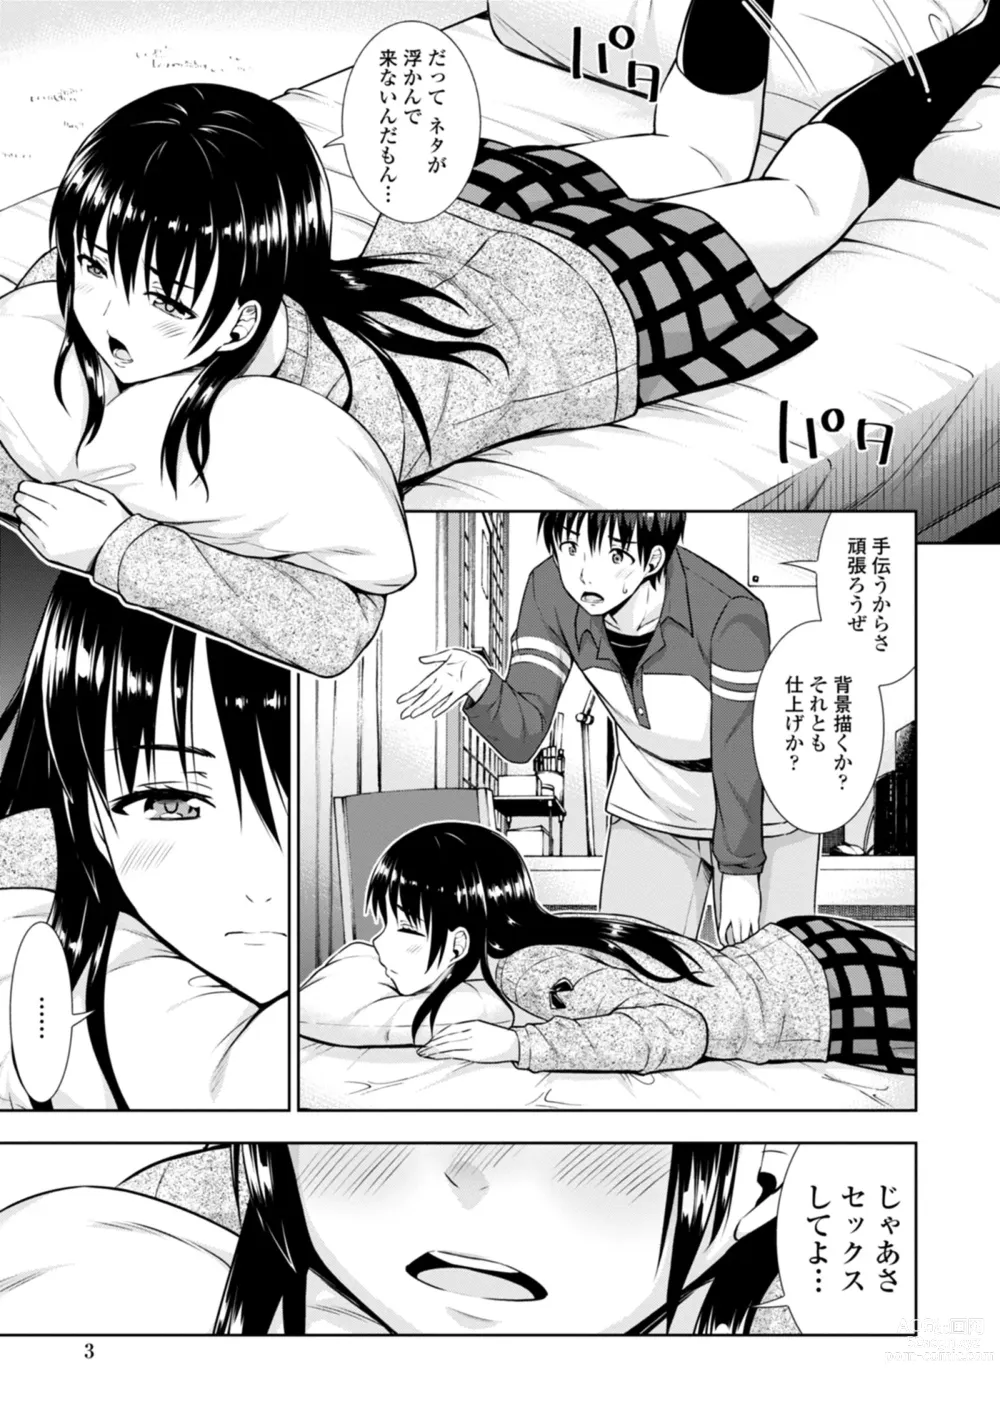 Page 5 of manga Onnanoko datte H Shitaku Narundamon.